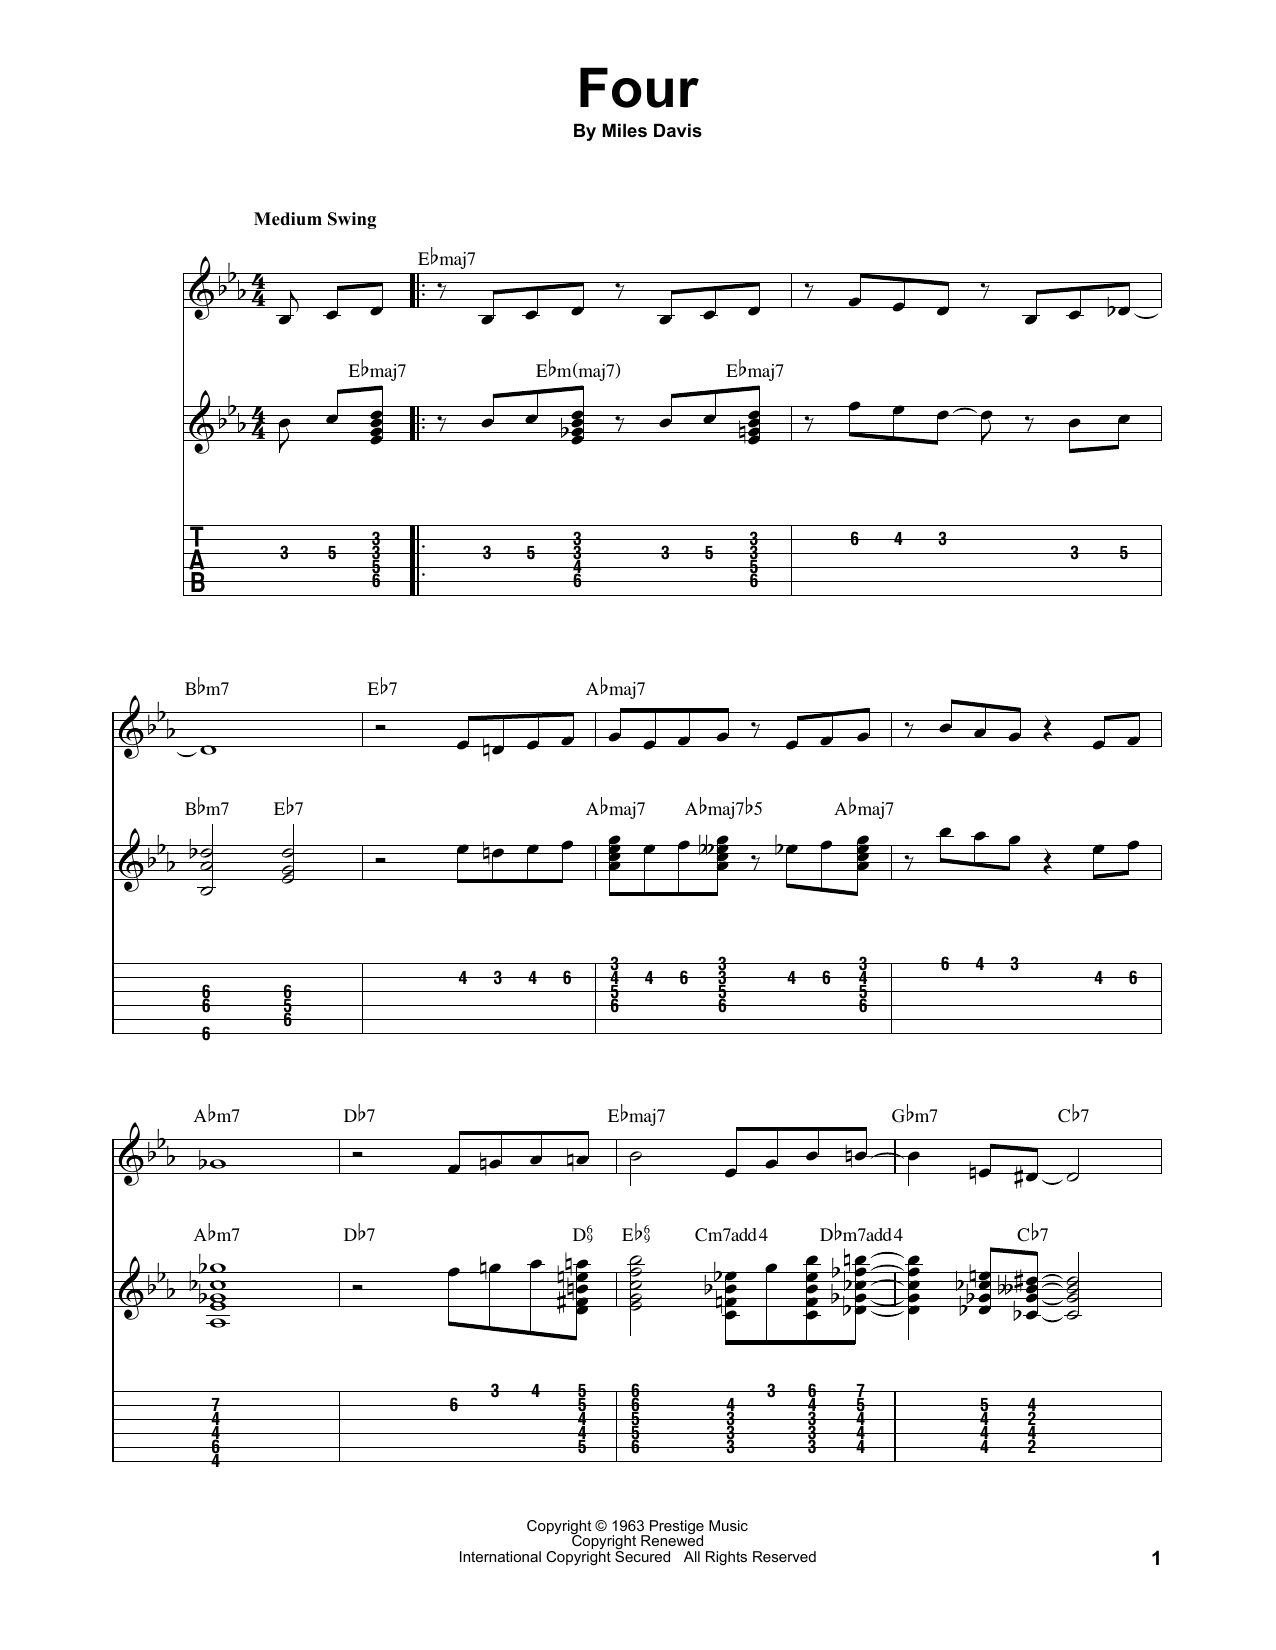 John Coltrane Four Sheet Music Notes & Chords for Easy Guitar Tab - Download or Print PDF